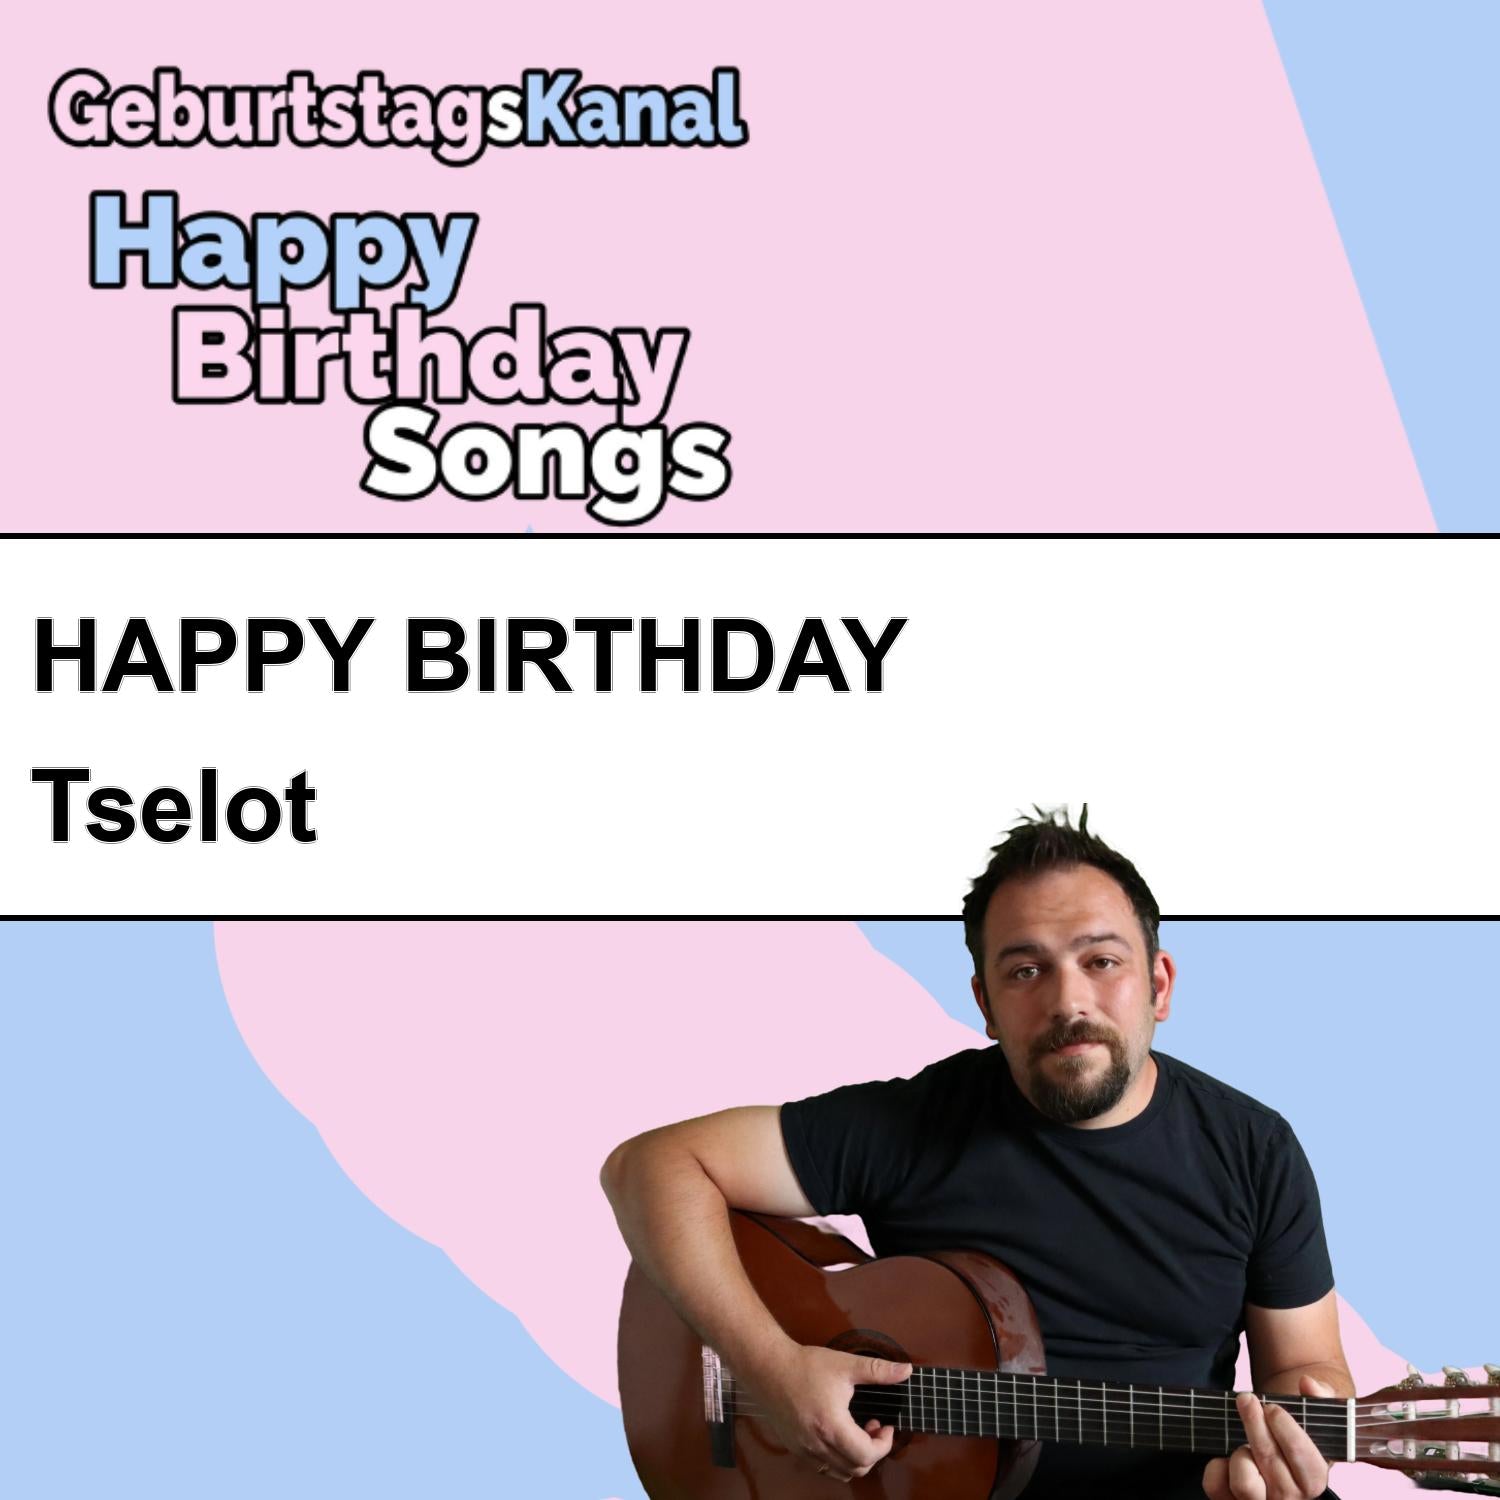 Produktbild Happy Birthday to you Tselot mit Wunschgrußbotschaft